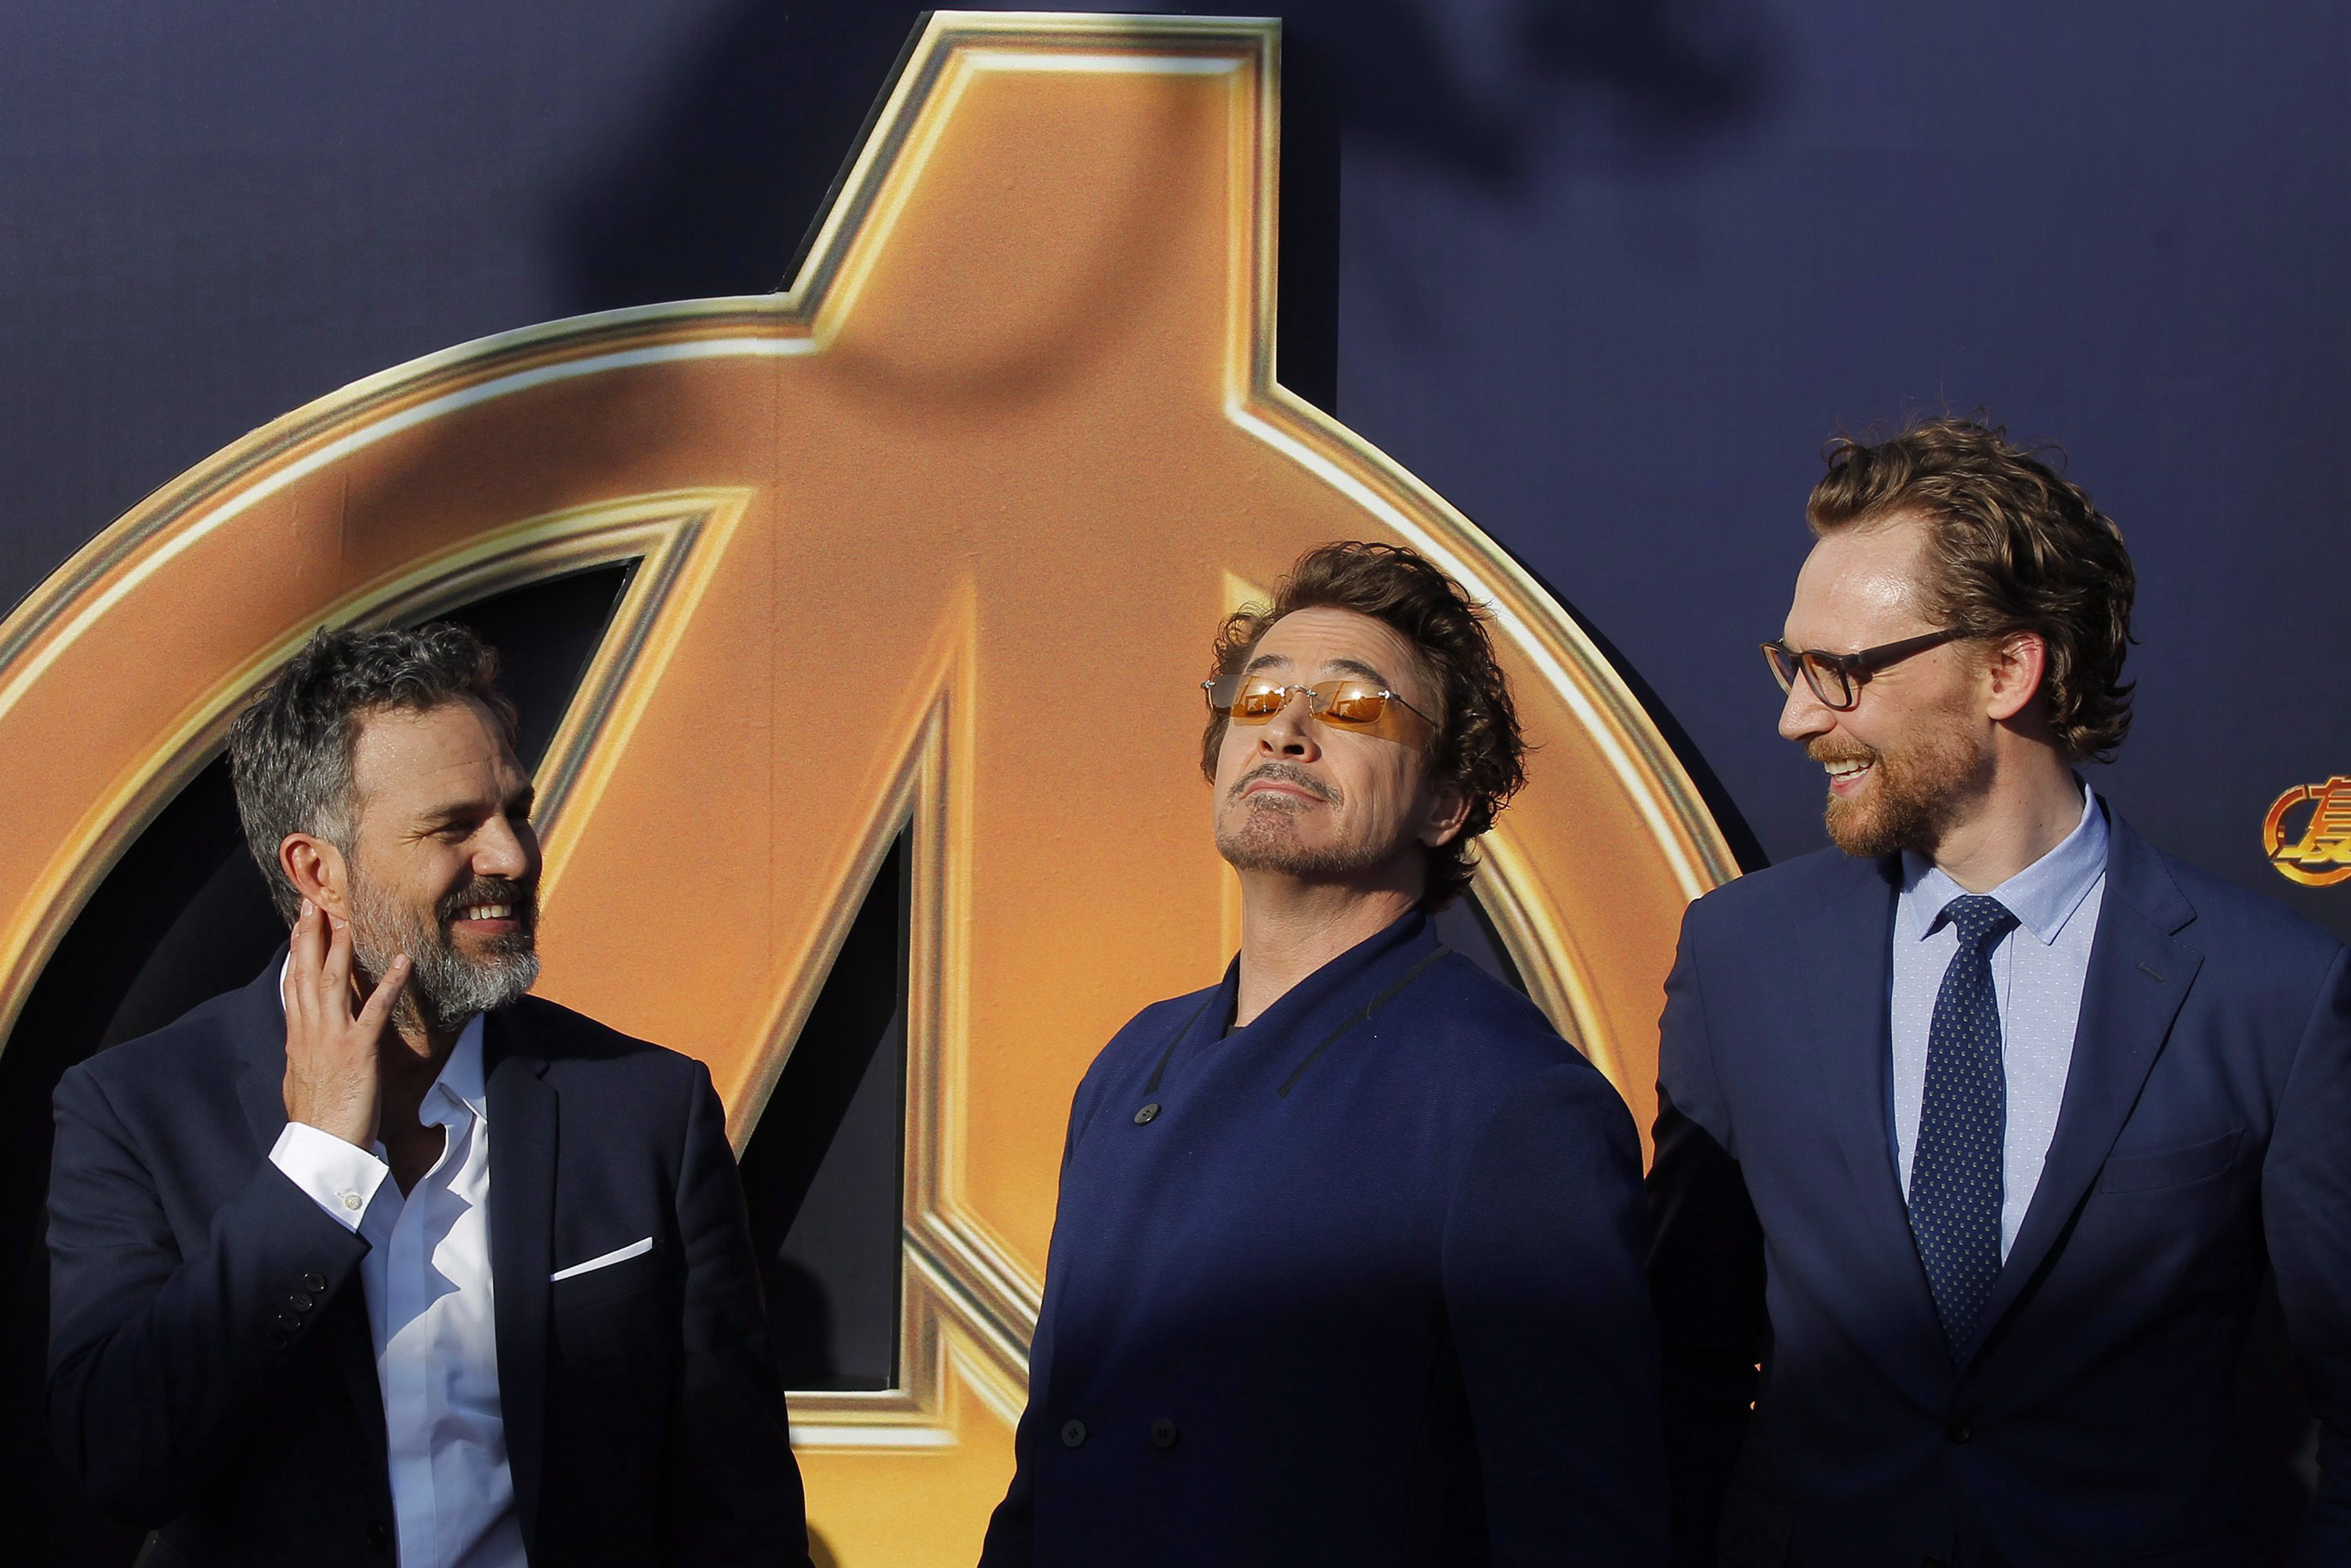 Avengers: Infinity War' surpasses expectations